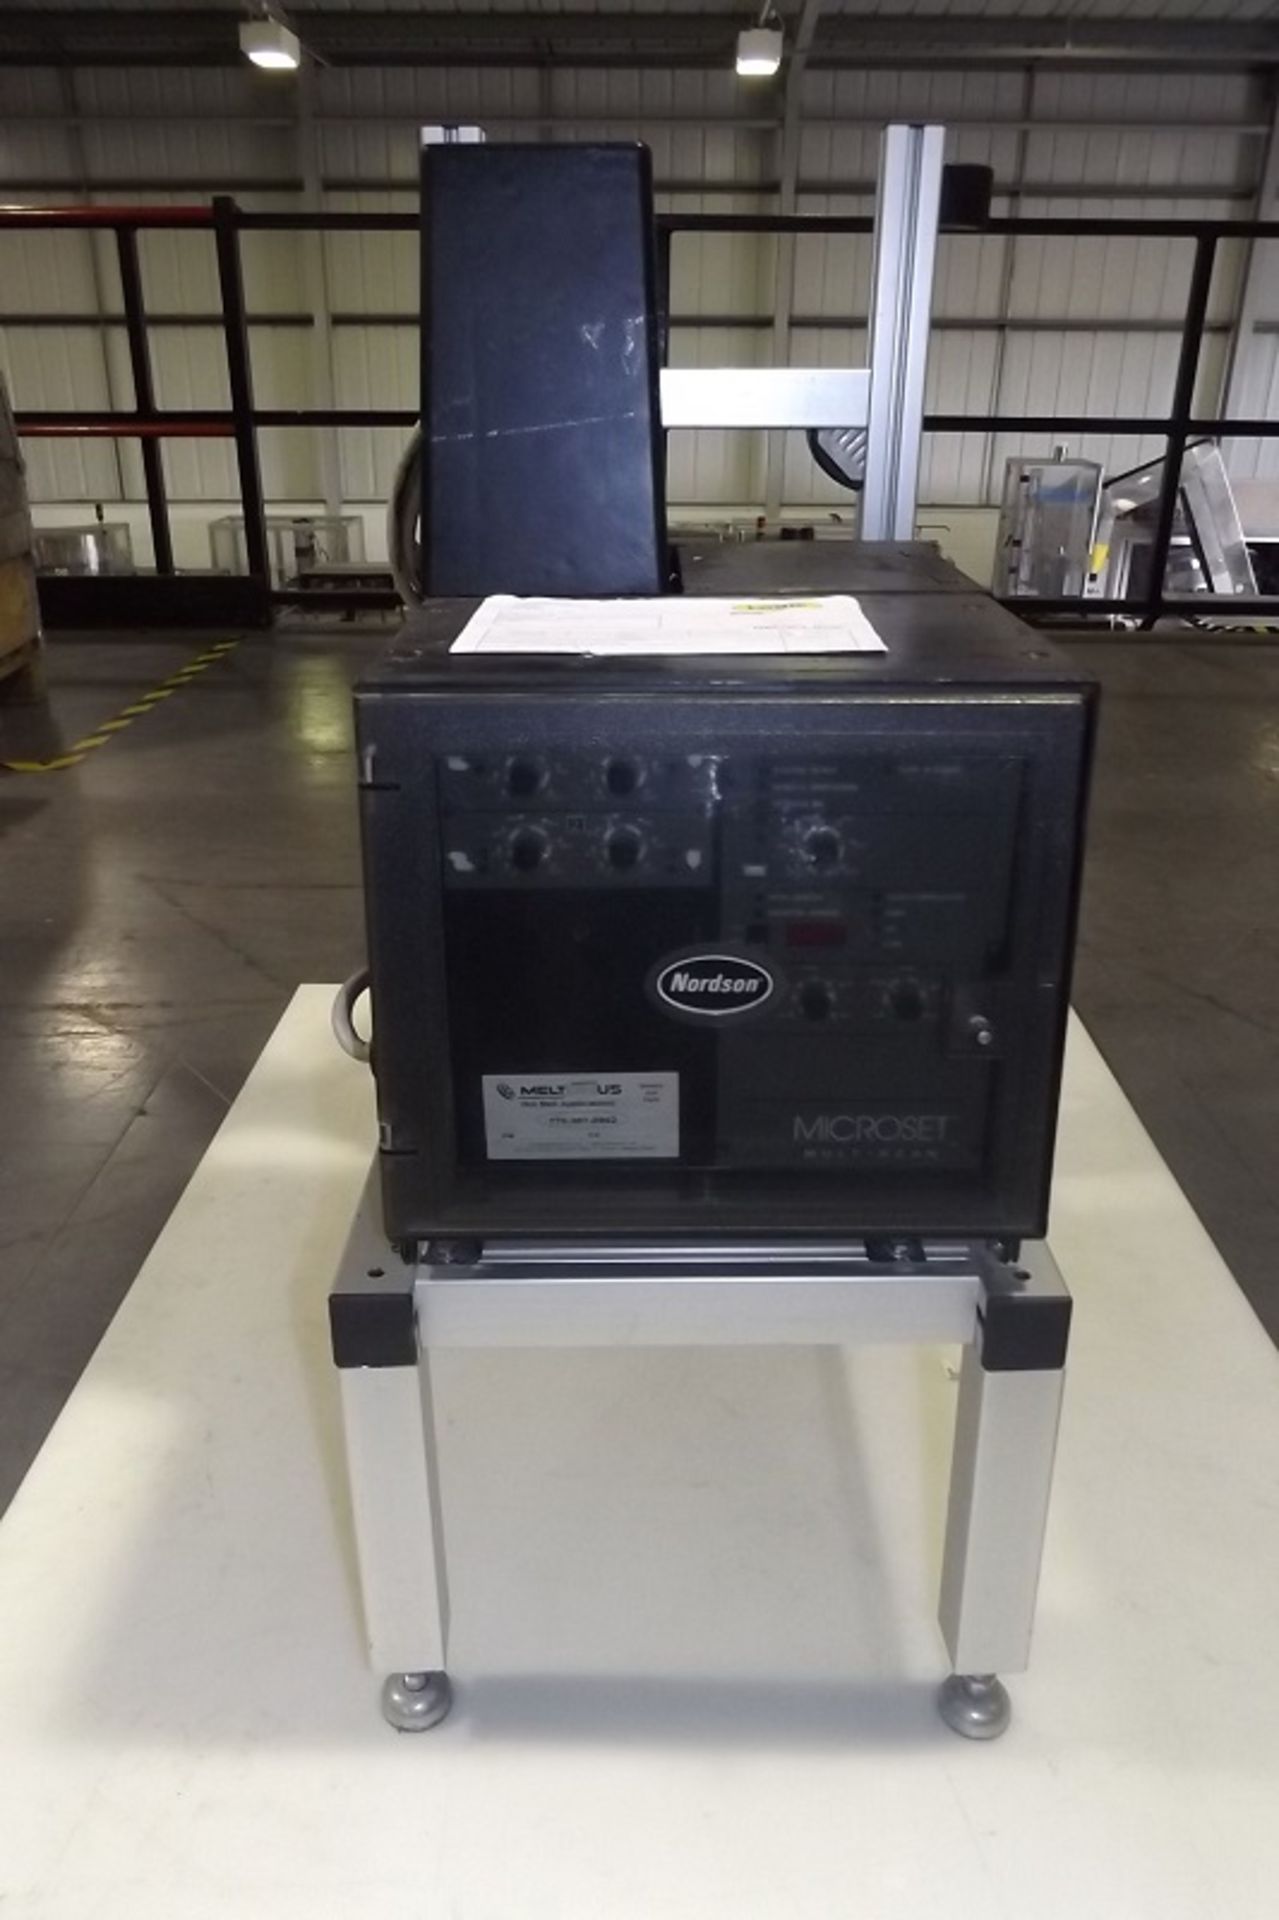 Nordson Series 3100 hot melt applicator. Electric